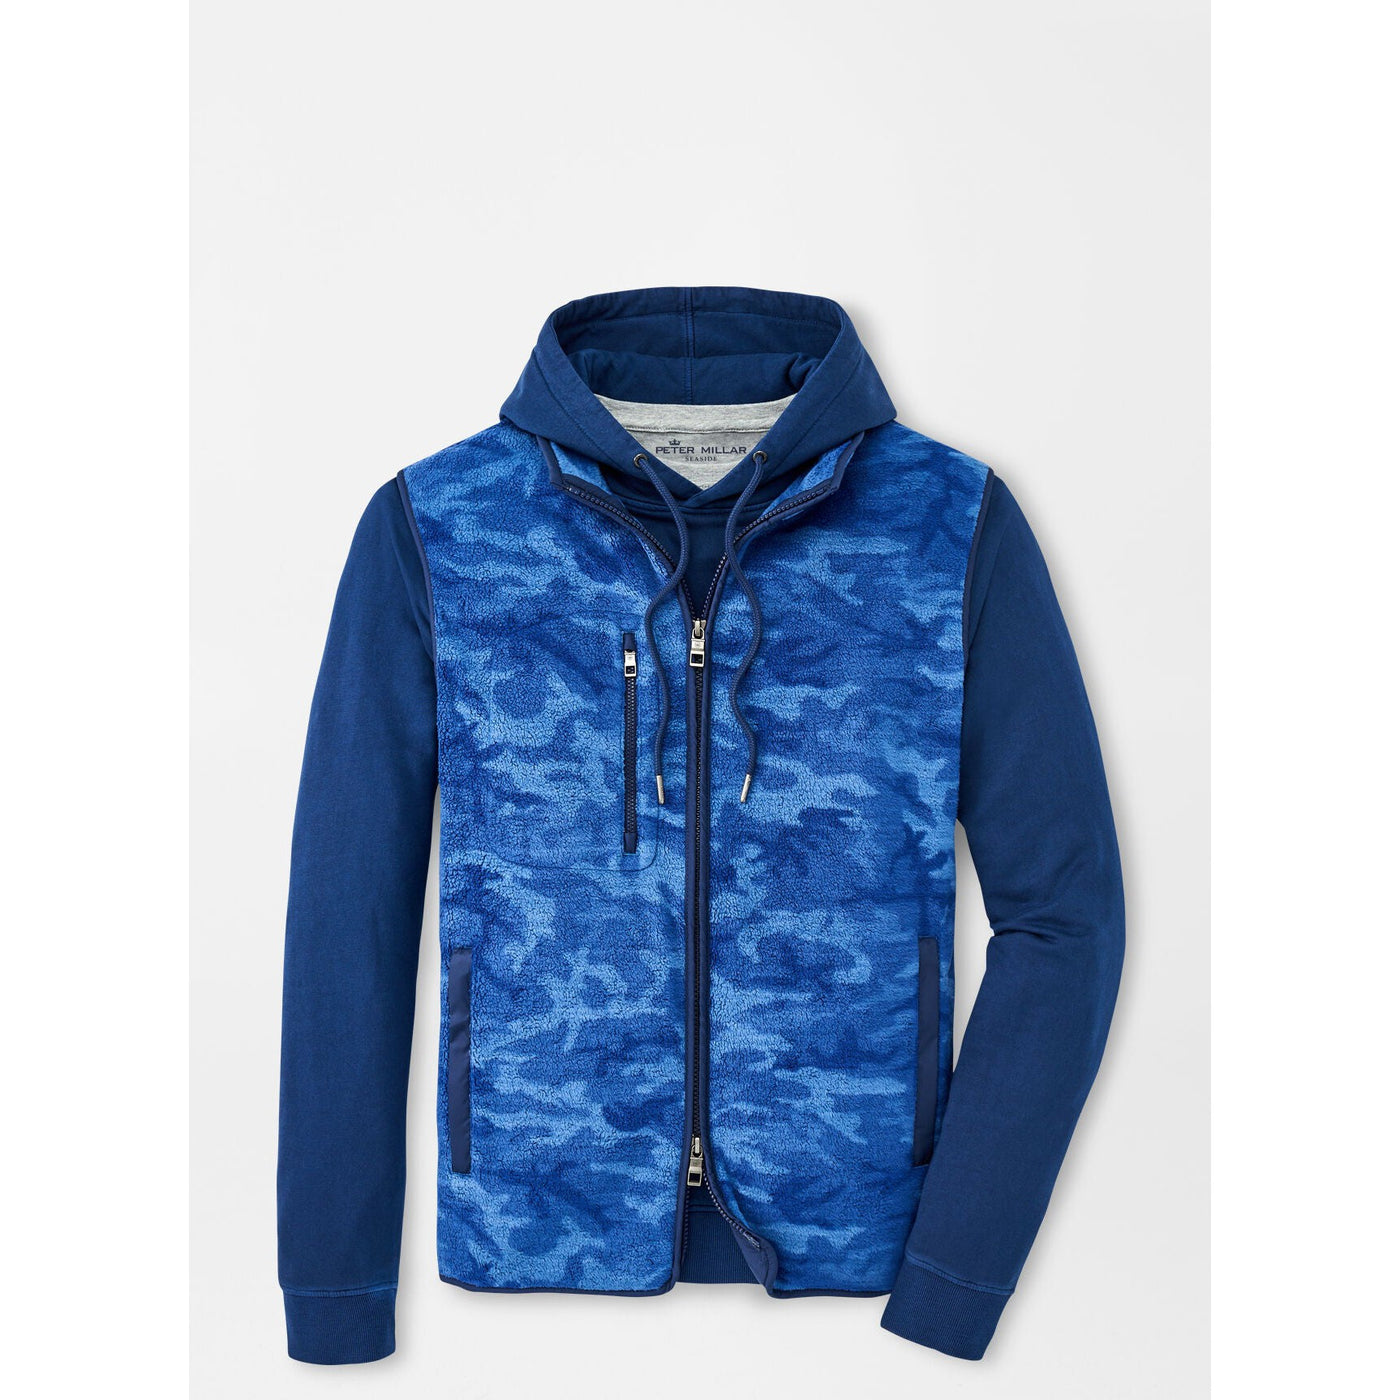 Peter Millar Micro Shearling Fleece Vest-Men's Clothing-Atlantic Blue-M-Kevin's Fine Outdoor Gear & Apparel